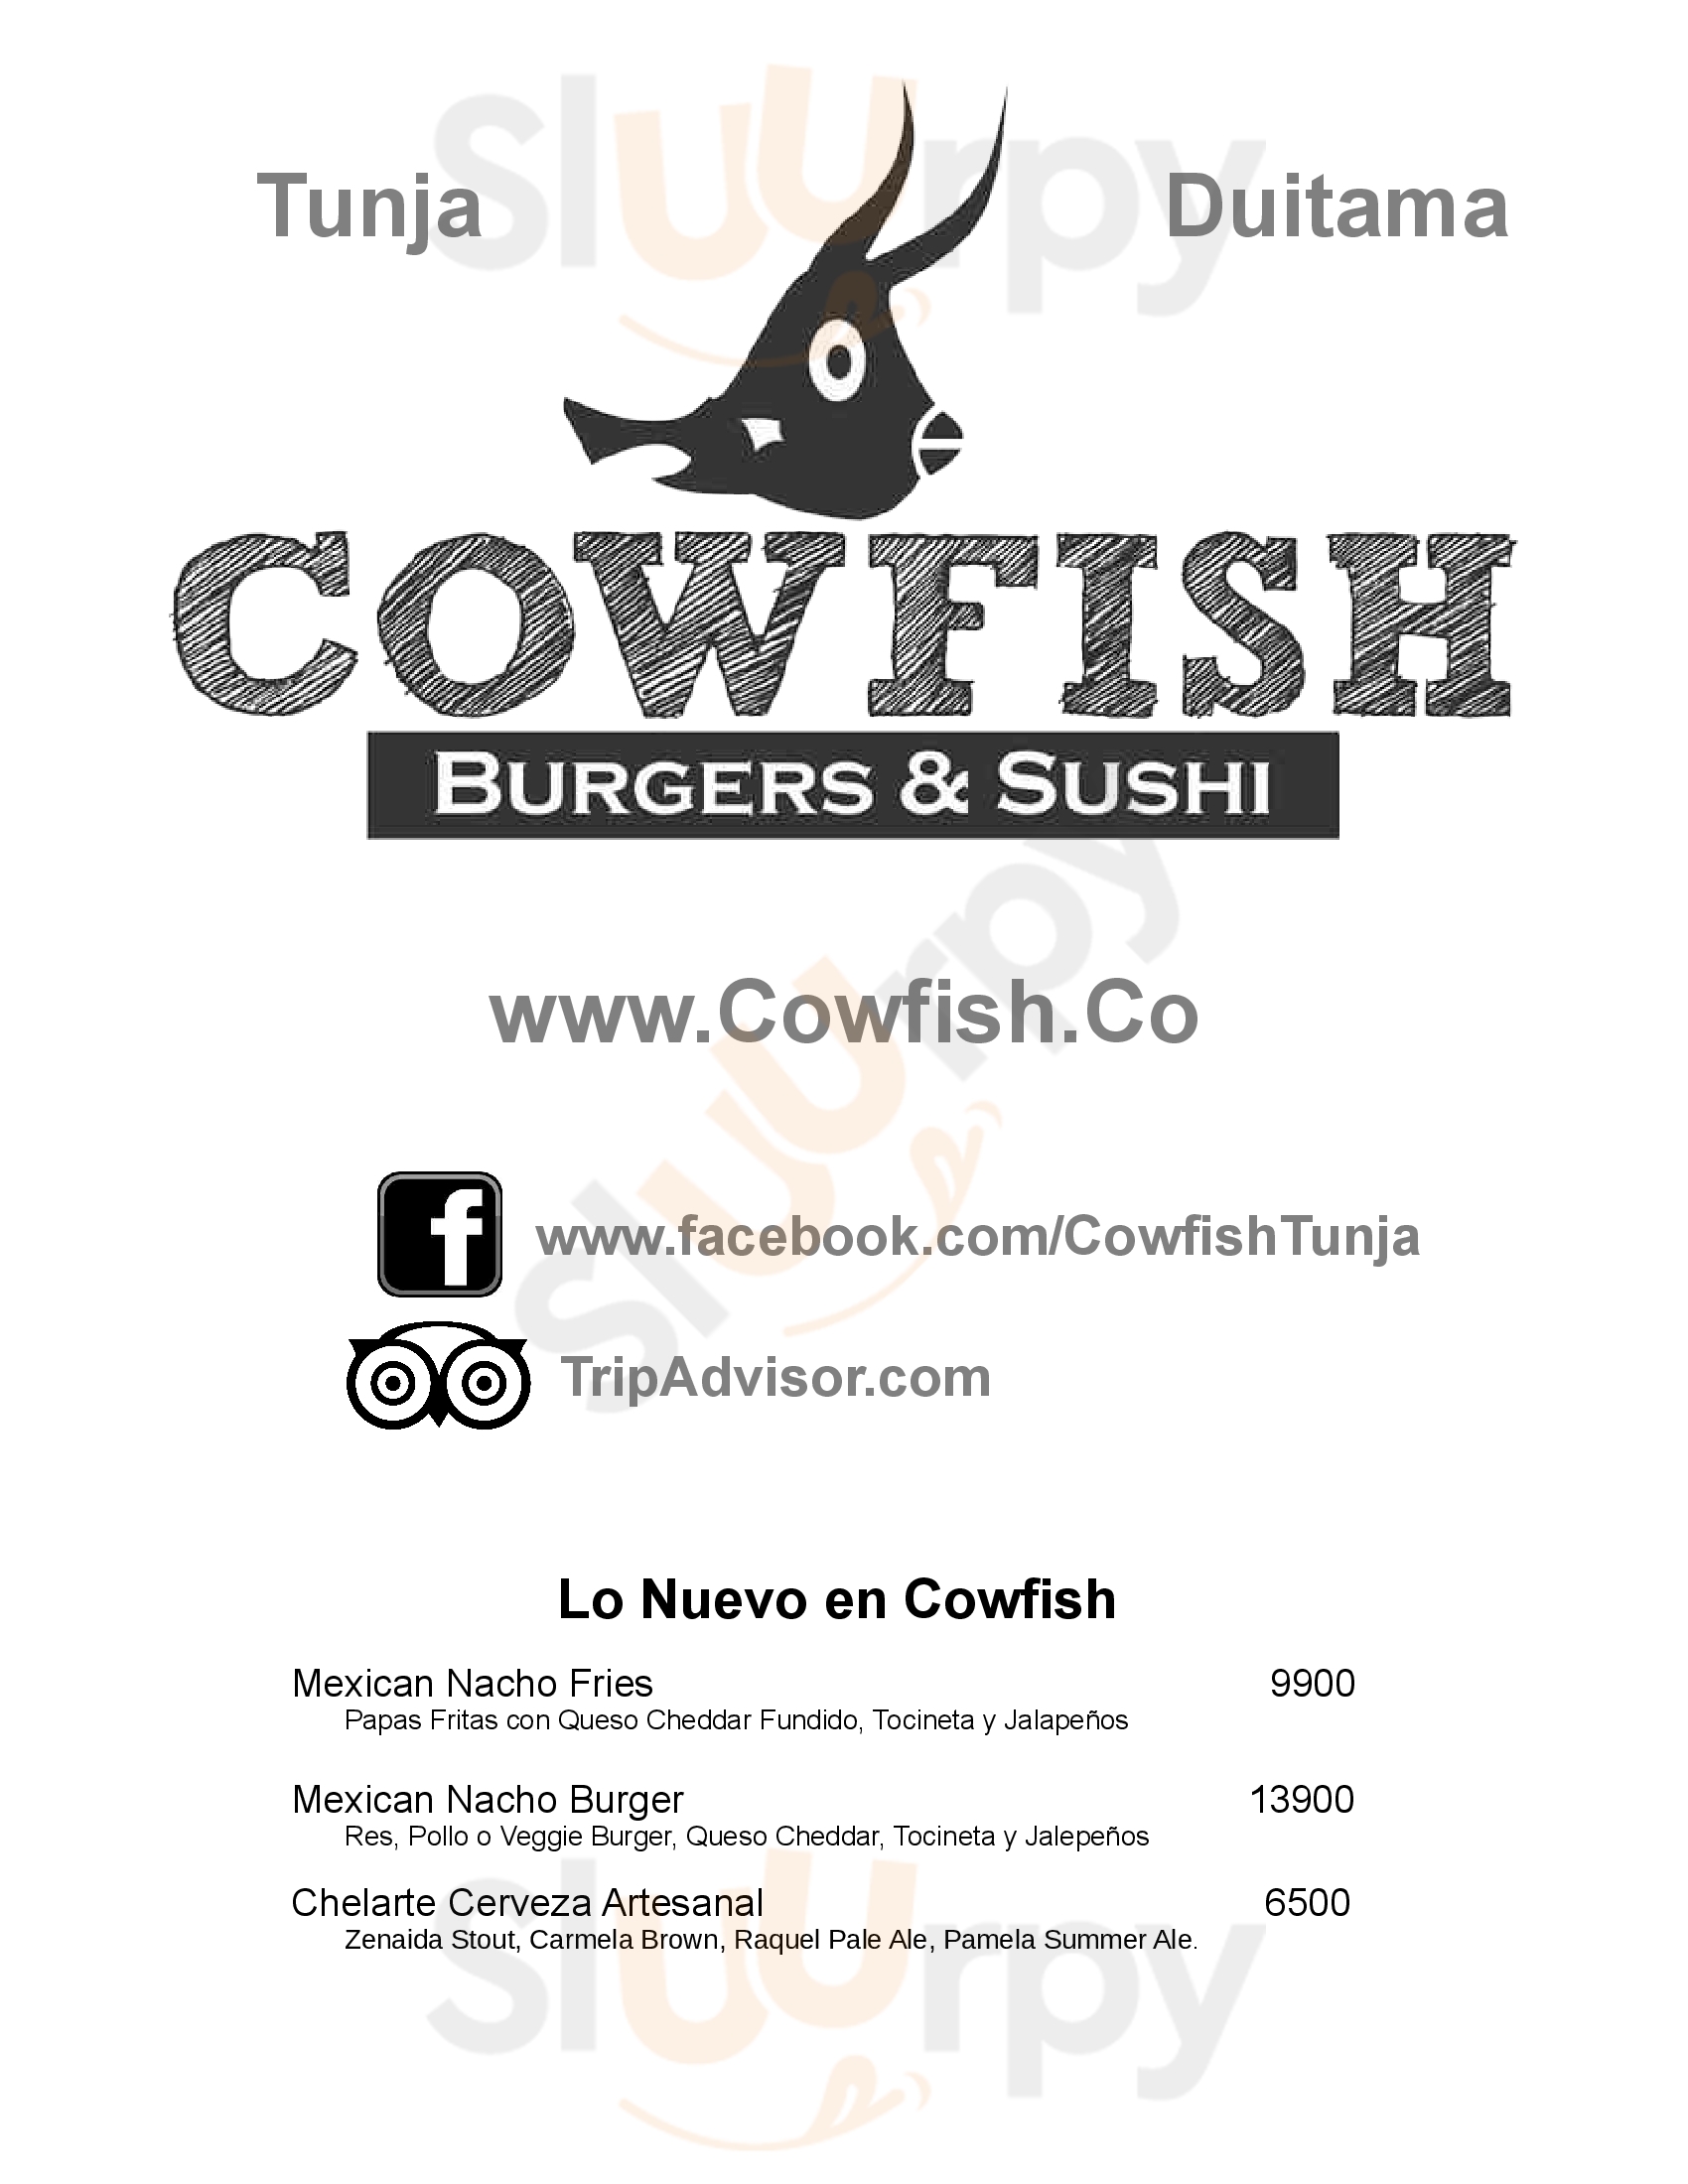 Cowfish Burgers & Sushi Tunja Menu - 1